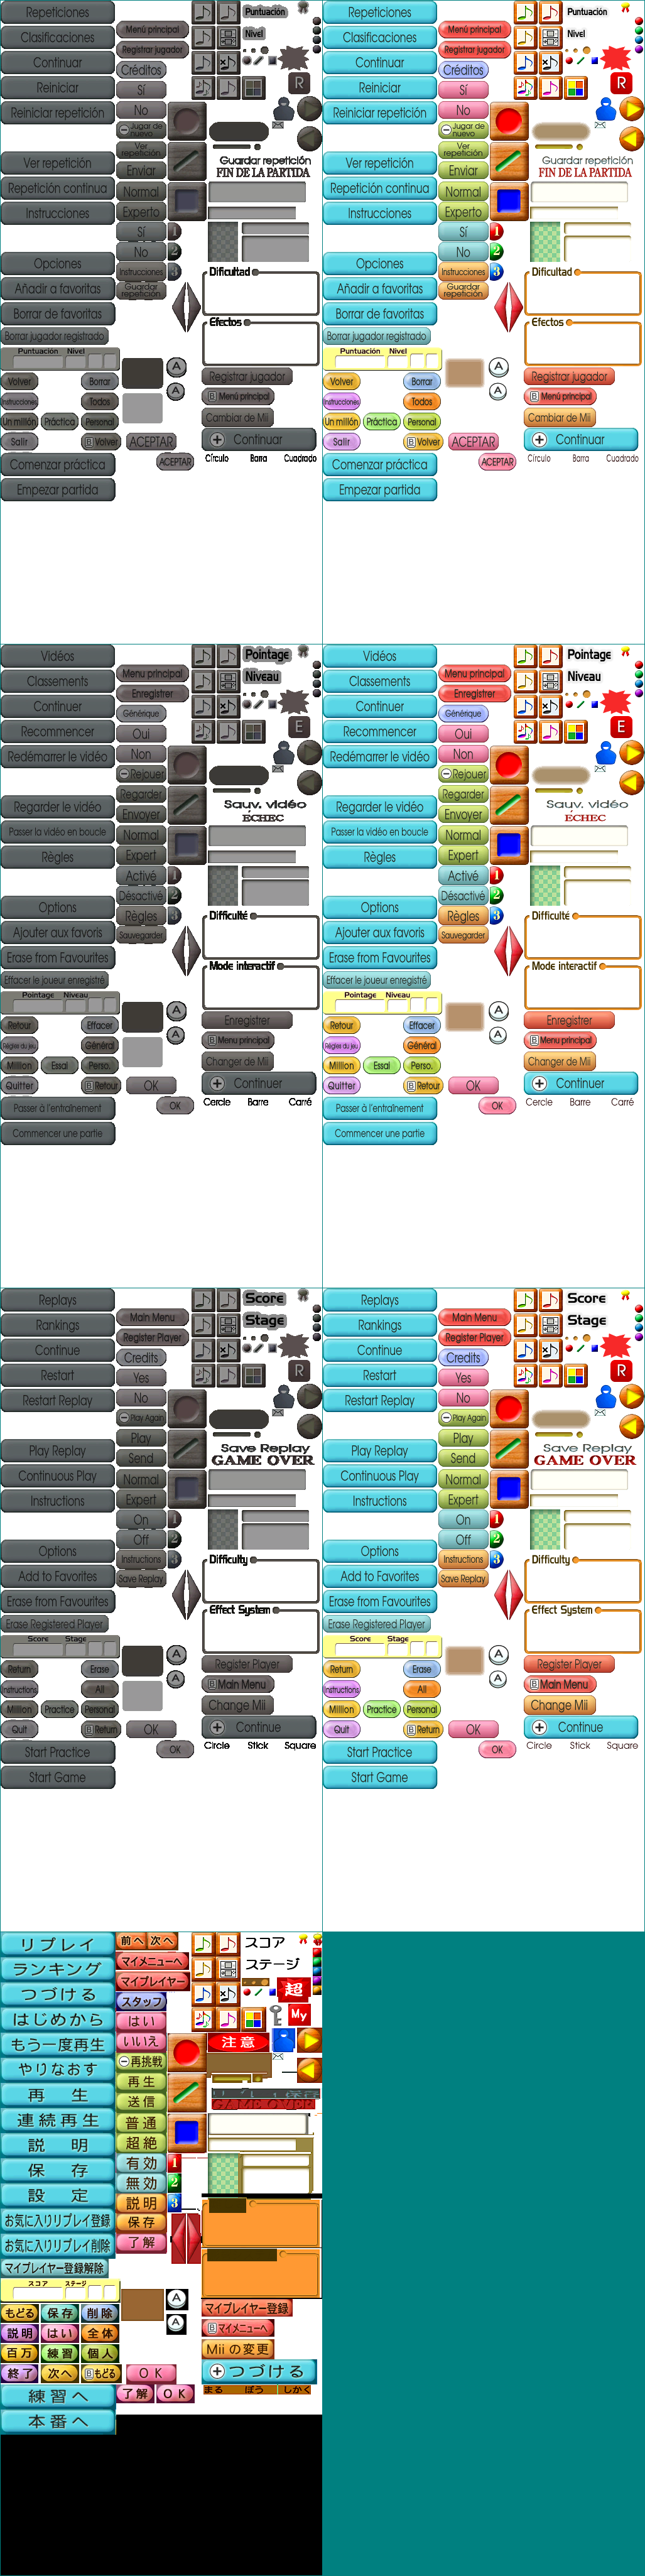 MaBoShi's Arcade - Buttons